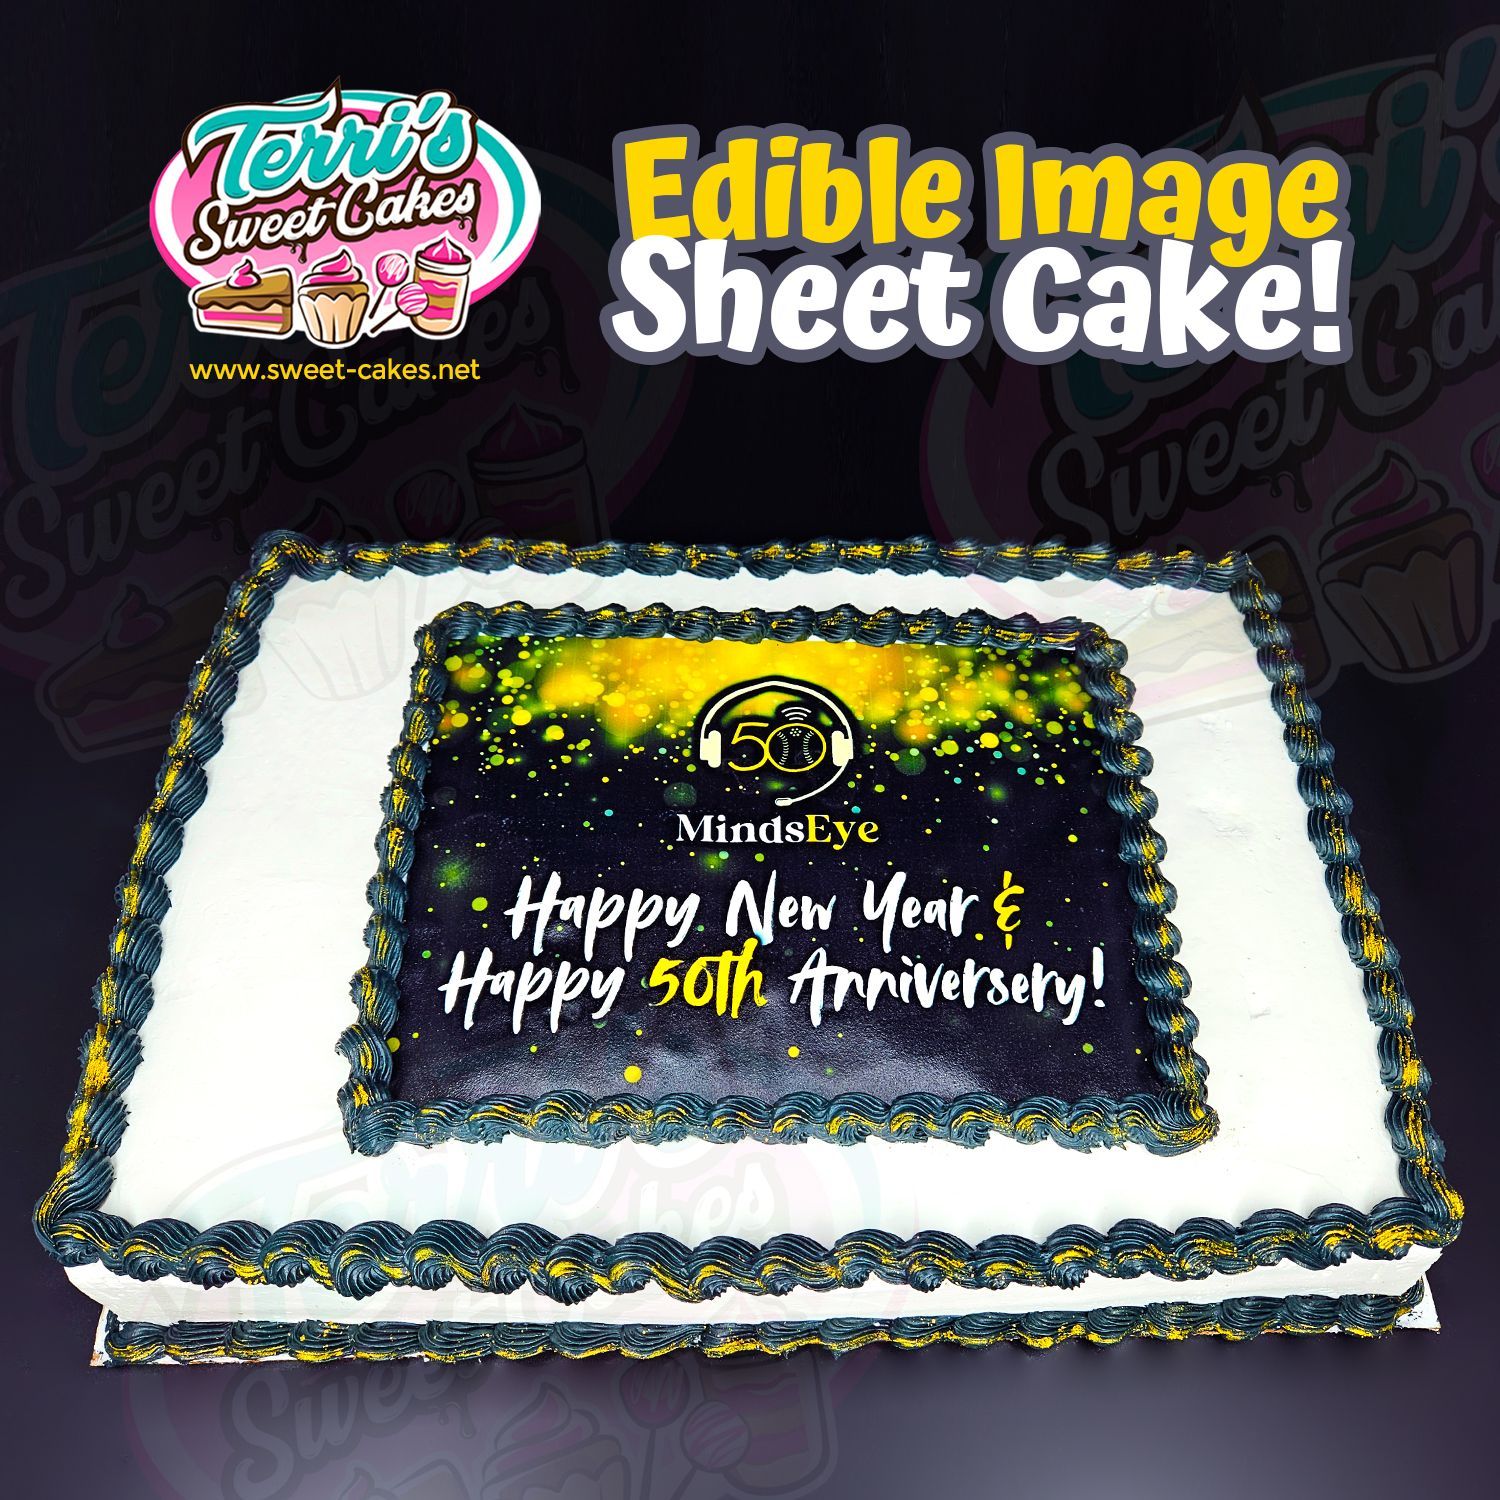 Edible Image Sheet Cake by Terri's Sweet Cakes!